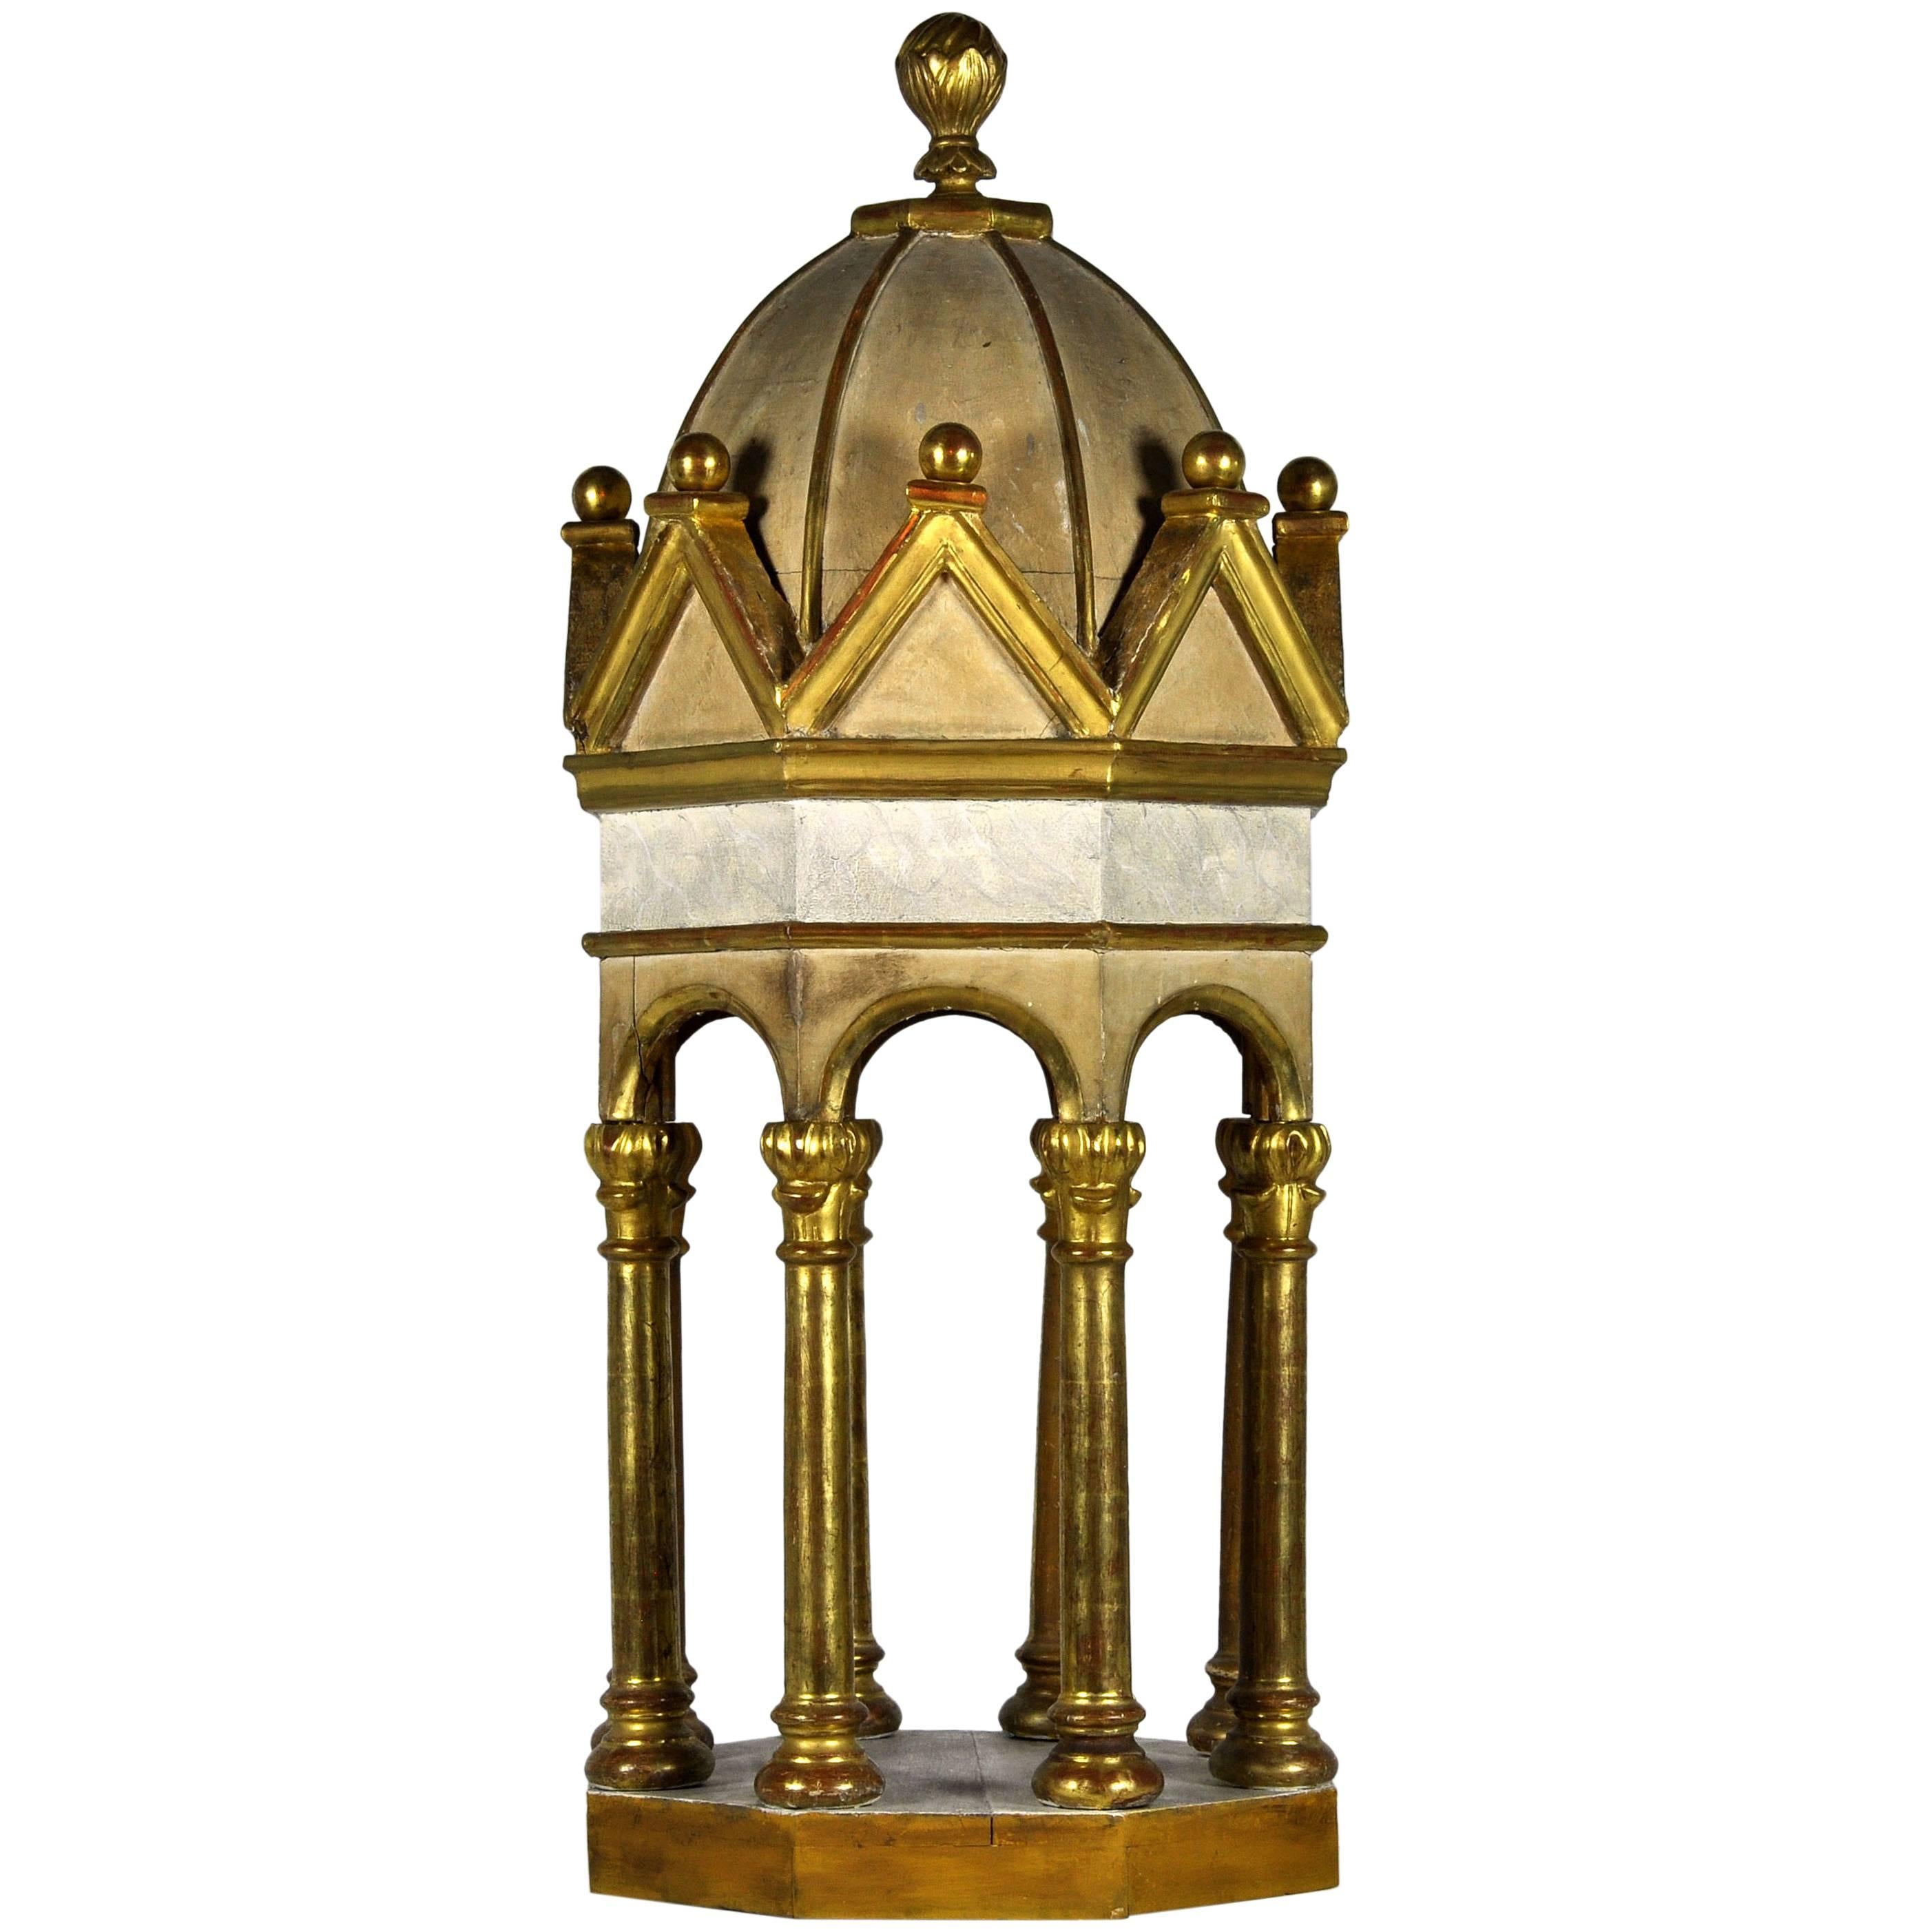 Unique 19th Century Italian Giltwood Octagonal Domed Pavilion Model